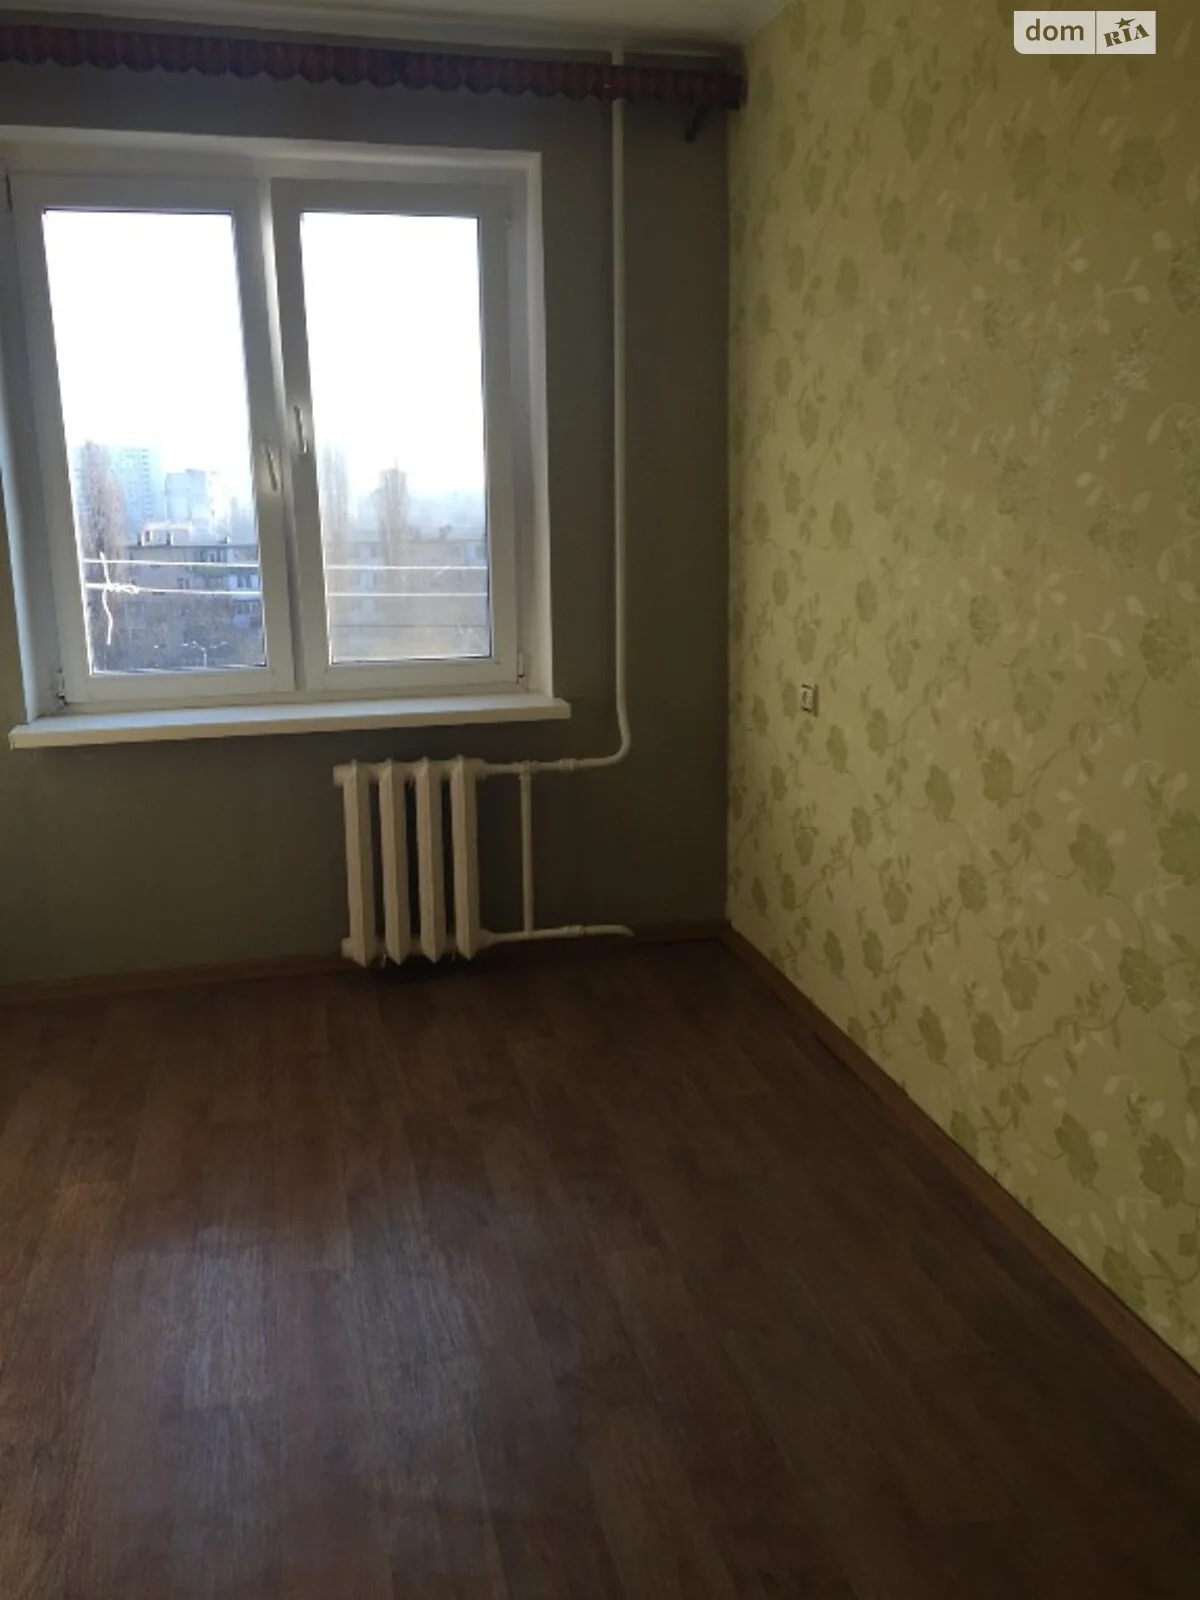 Продается комната 45 кв. м в Одессе, цена: 10000 $ - фото 1